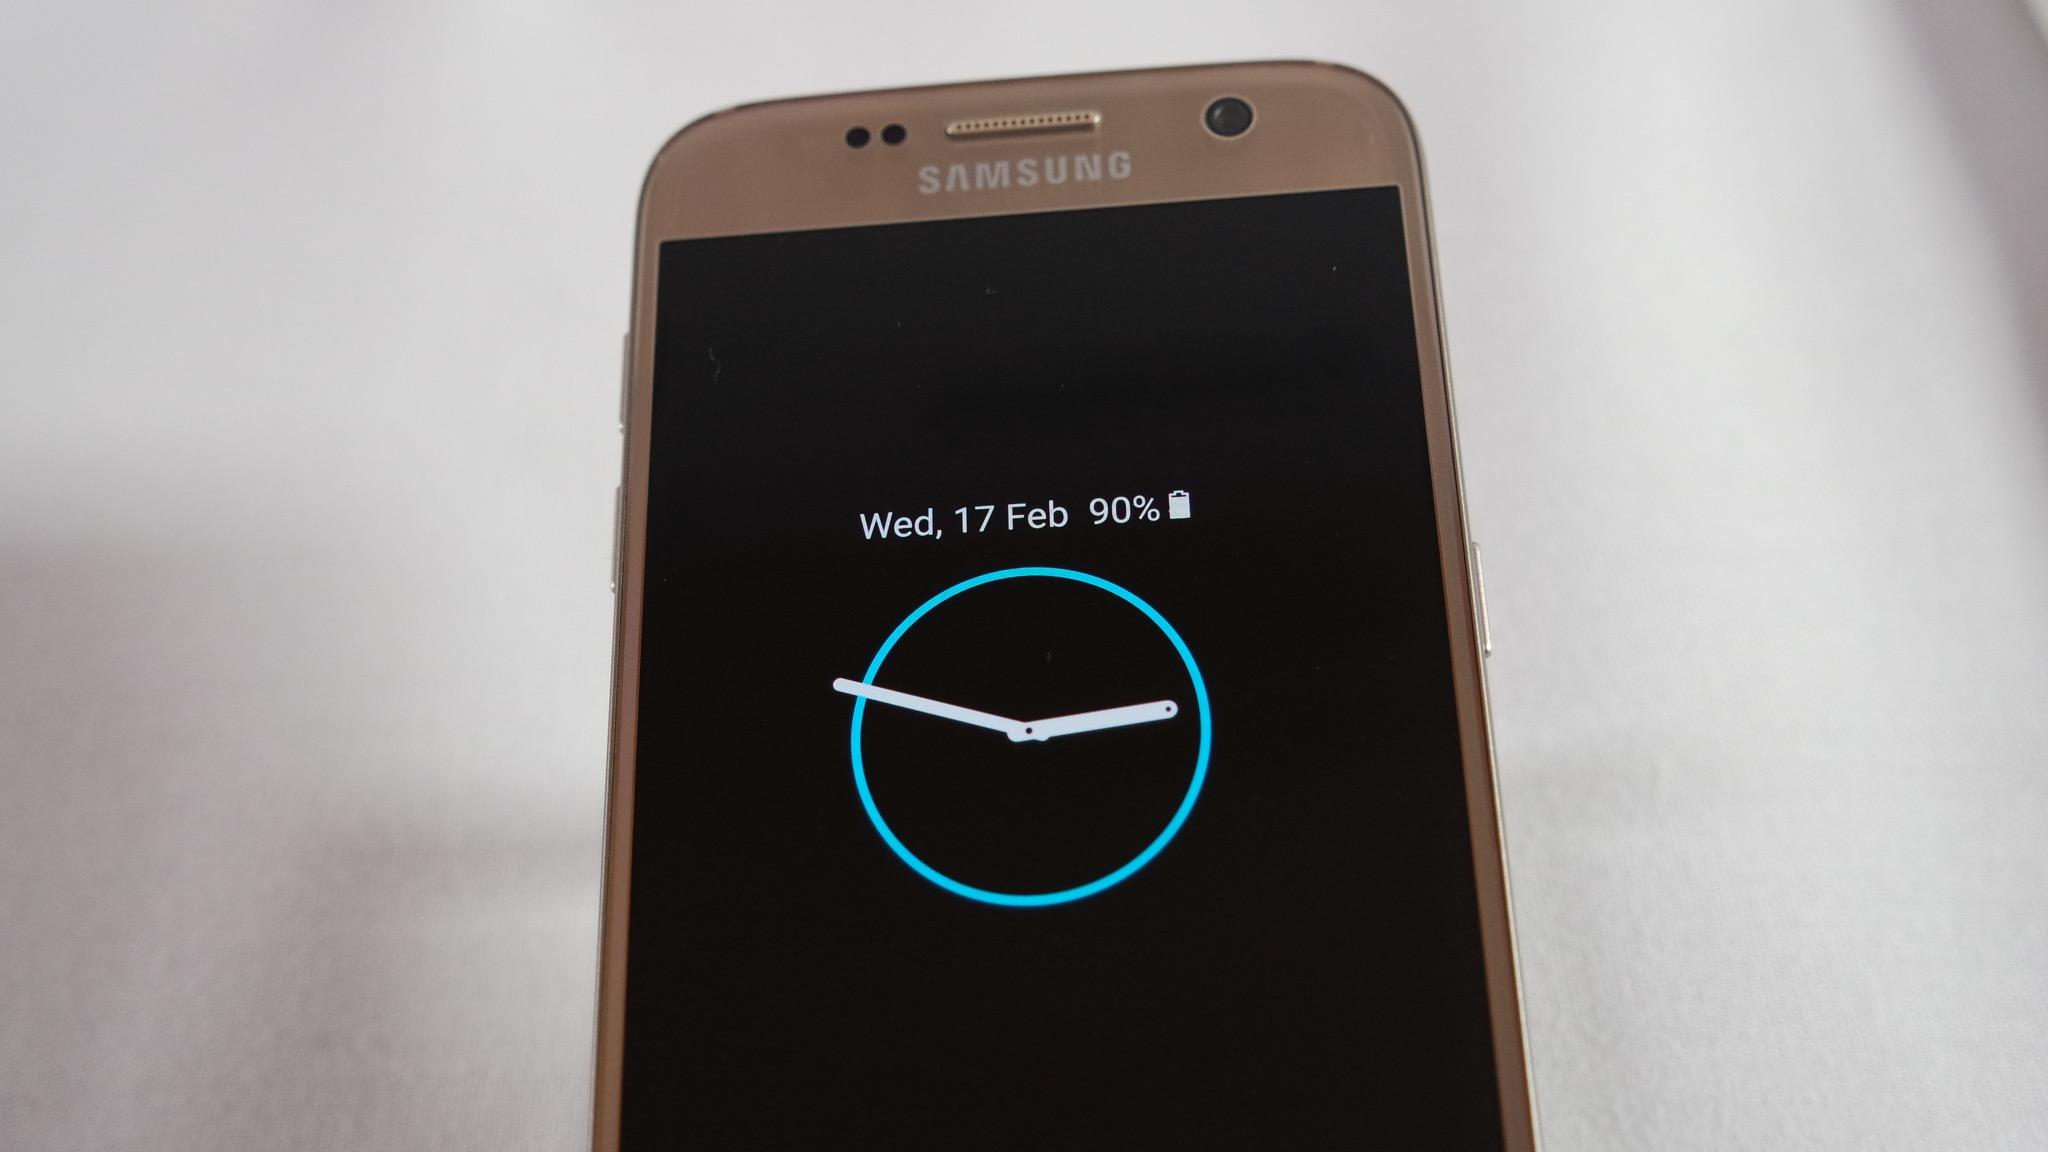 Samsung Galaxy S7 con función always on en pantalla